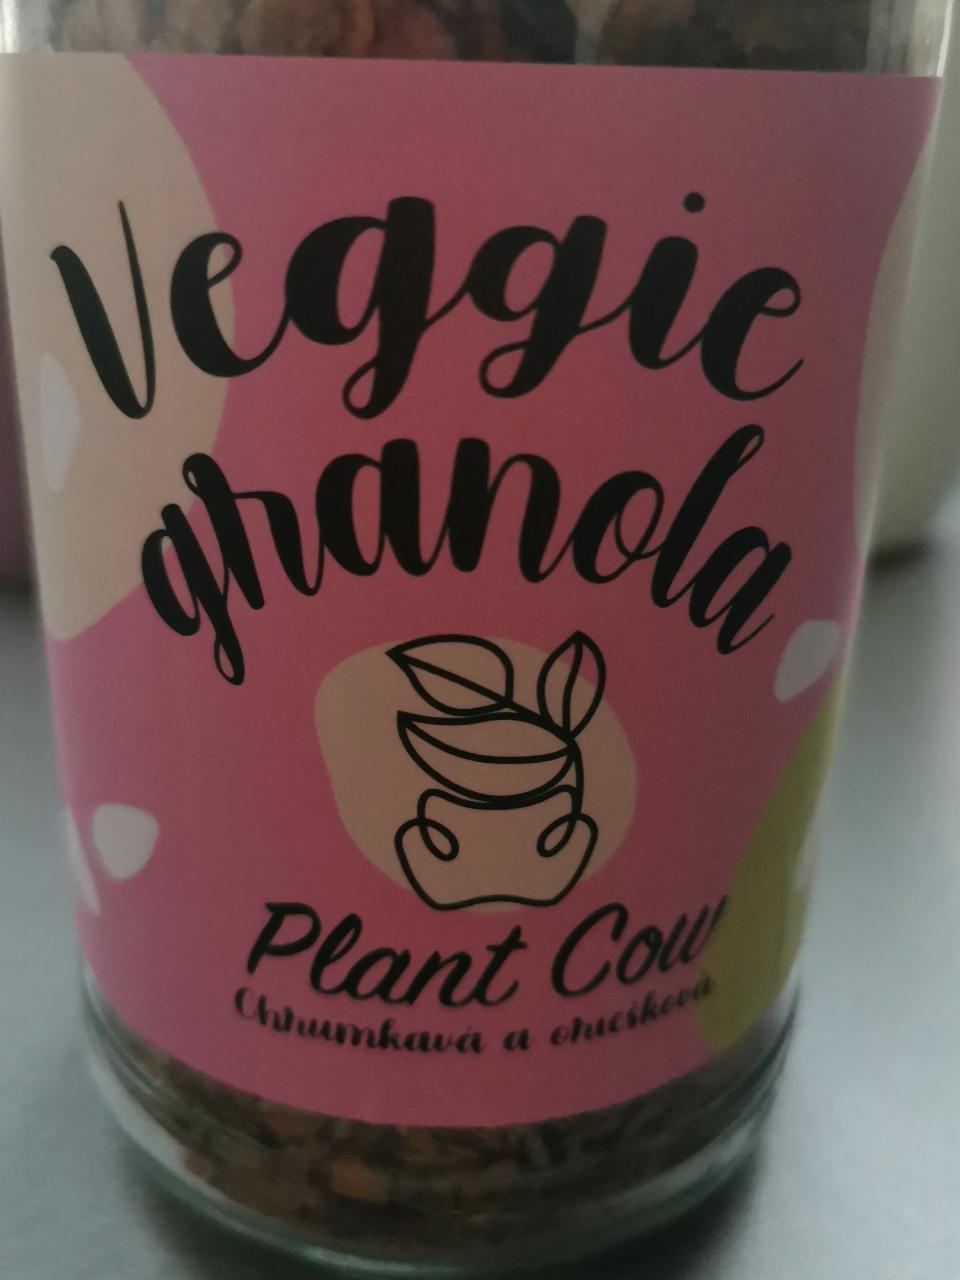 Fotografie - Veggie granola Plant Cow